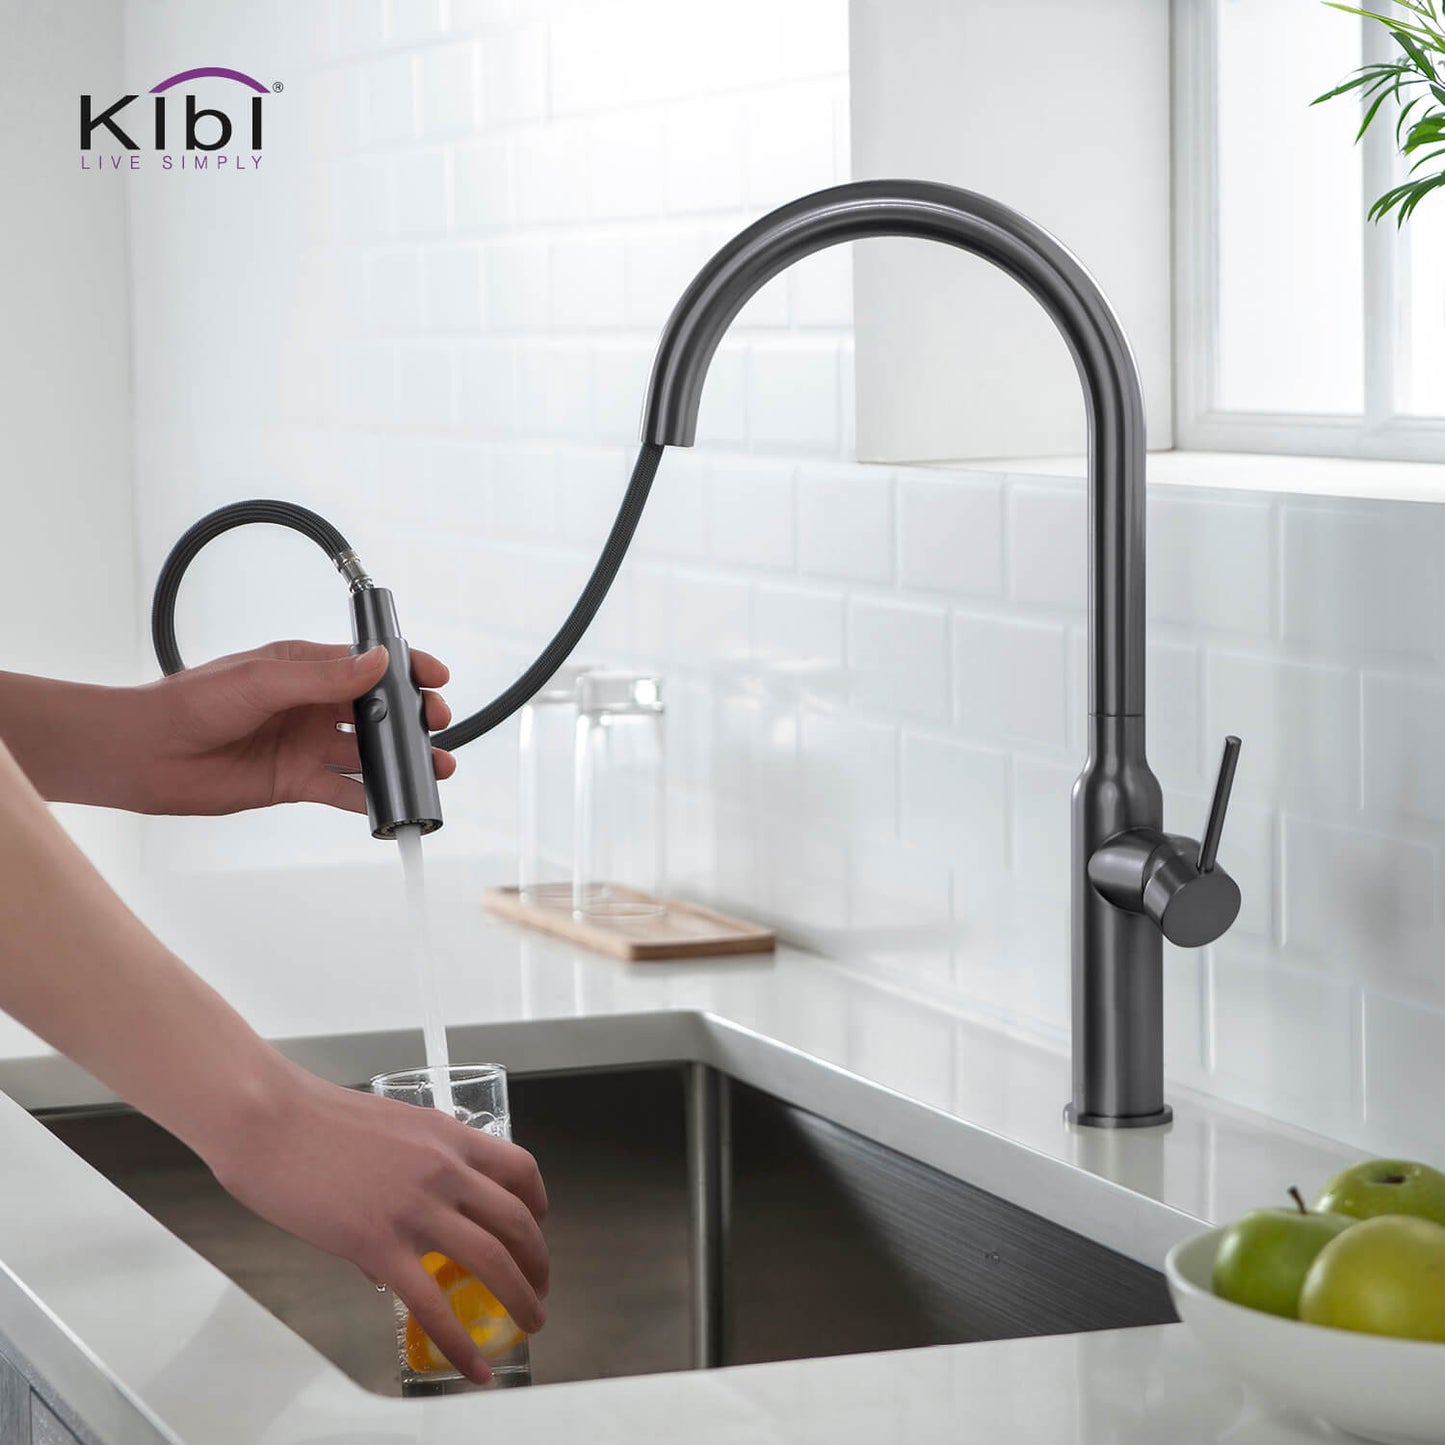 Kibi Hilo Single Handle High Arc Pull Down Kitchen Faucet With Soap Dispenser in Titanium Finish